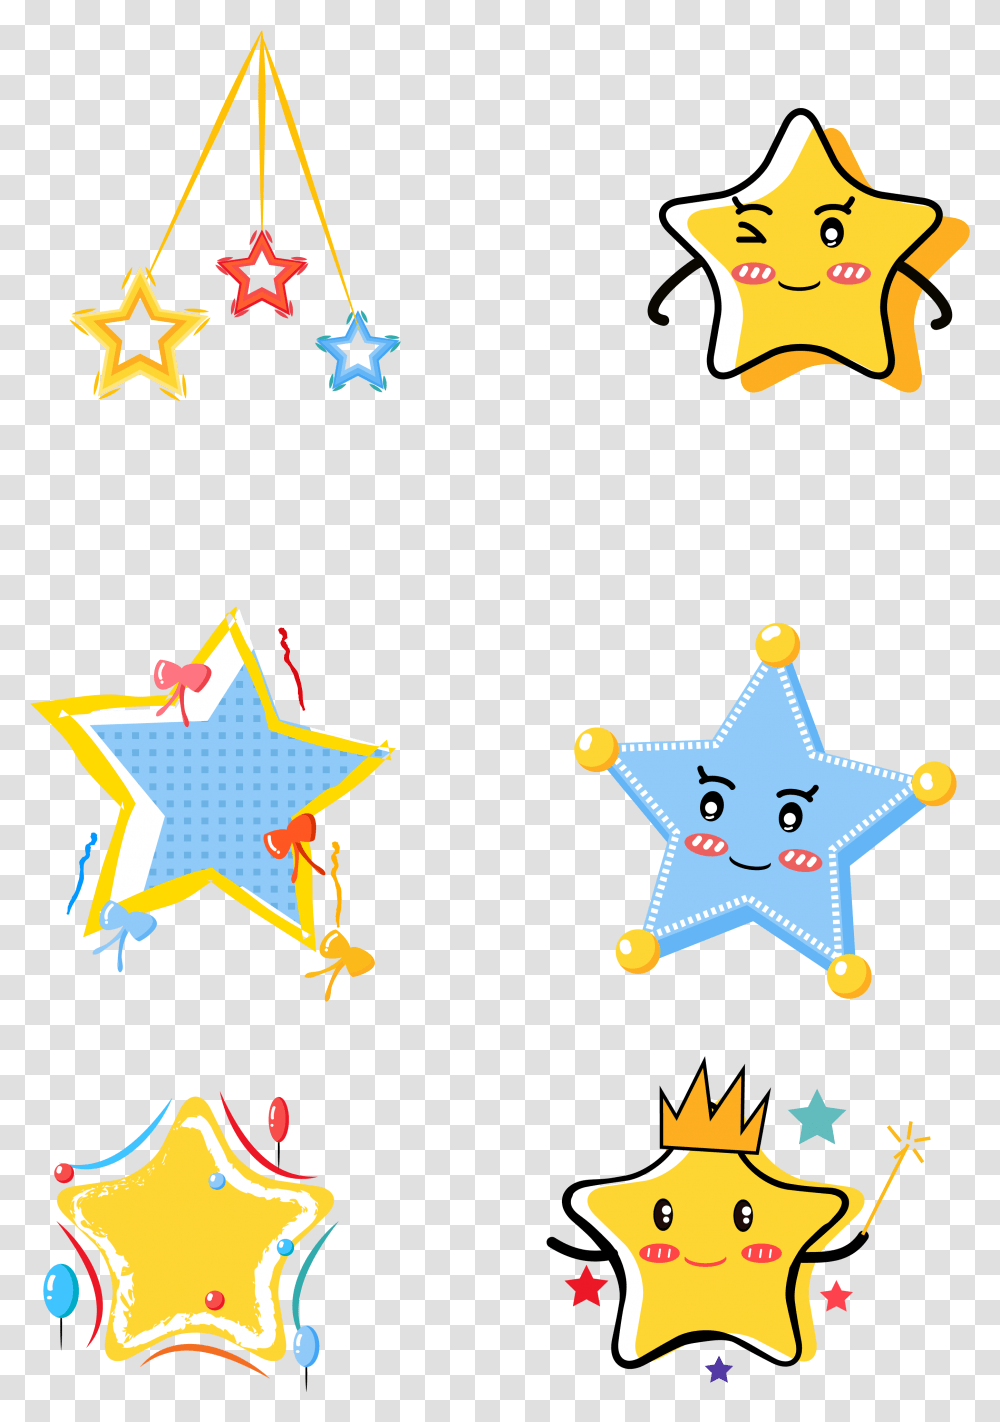 Doodle Stars Pentagram Stars Cute Pointed Star Cute Vector Art, Star Symbol Transparent Png